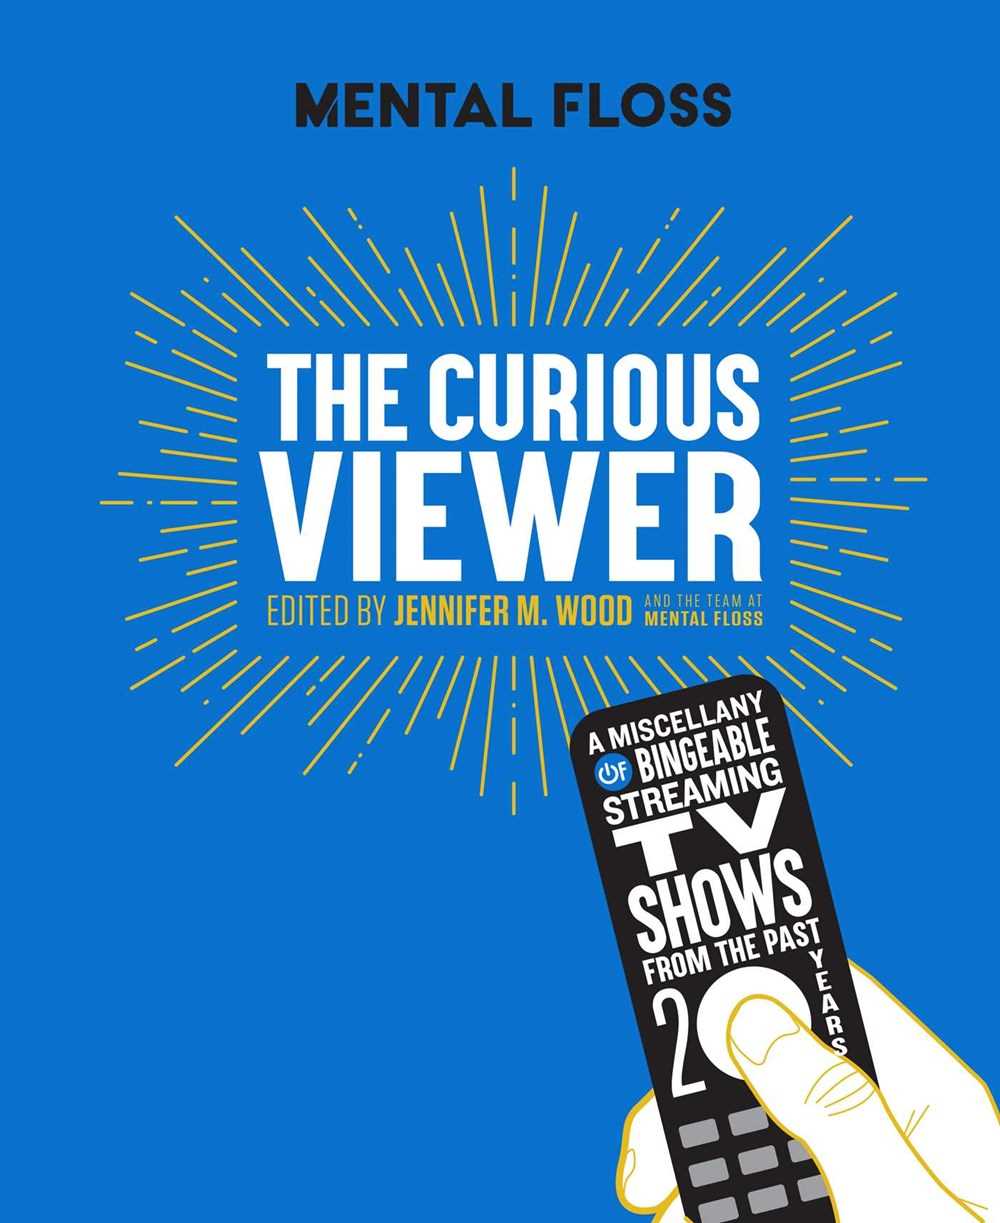 The Curious Viewer (Mental Floss)